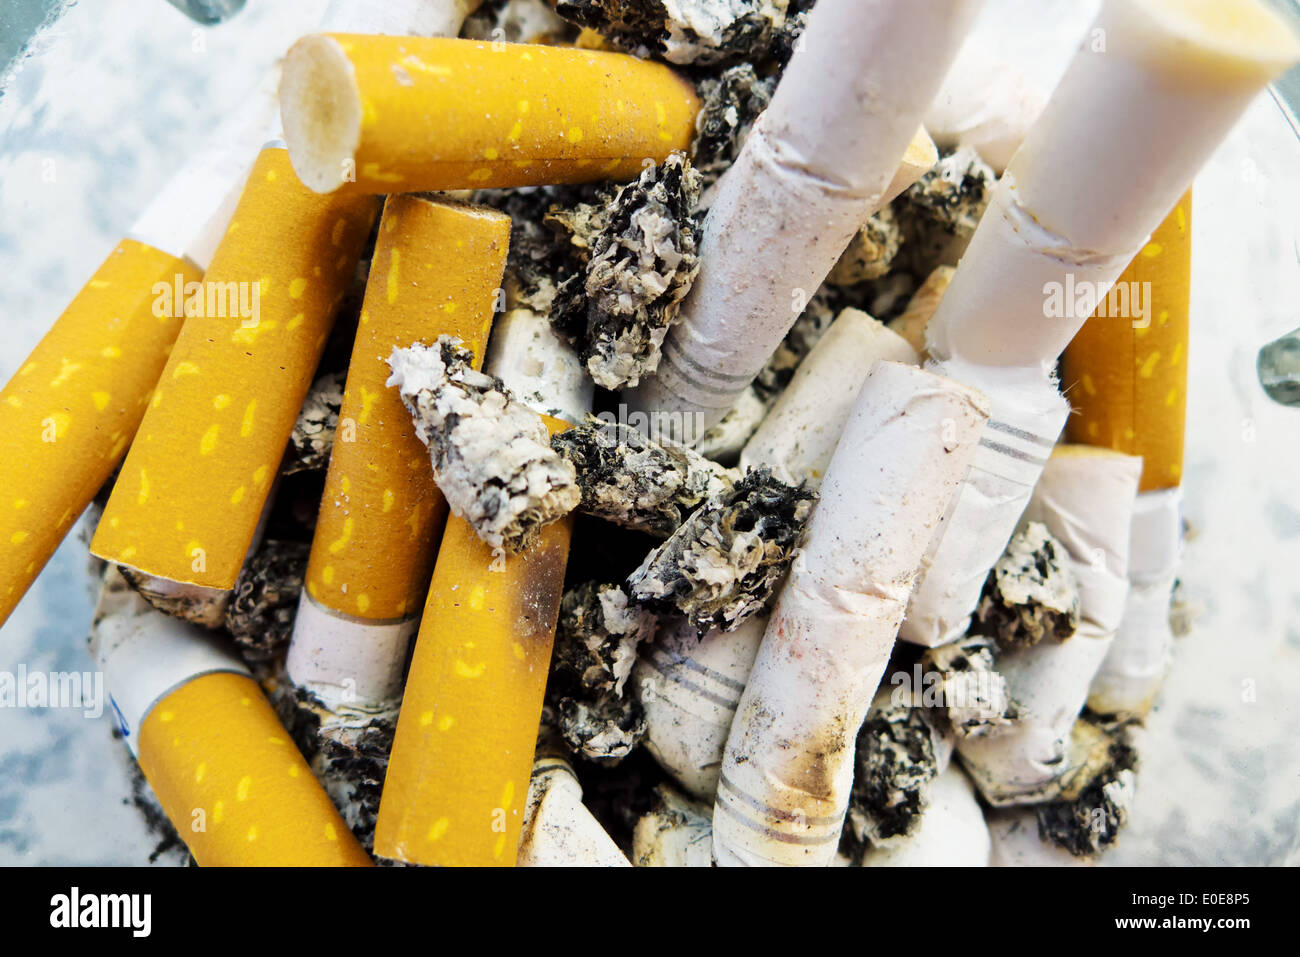 Muchos manantiales de cigarrillos se encuentran en un cenicero, Viele Kippen von einem Aschenbecher Zigaretten liegen en. Foto de stock